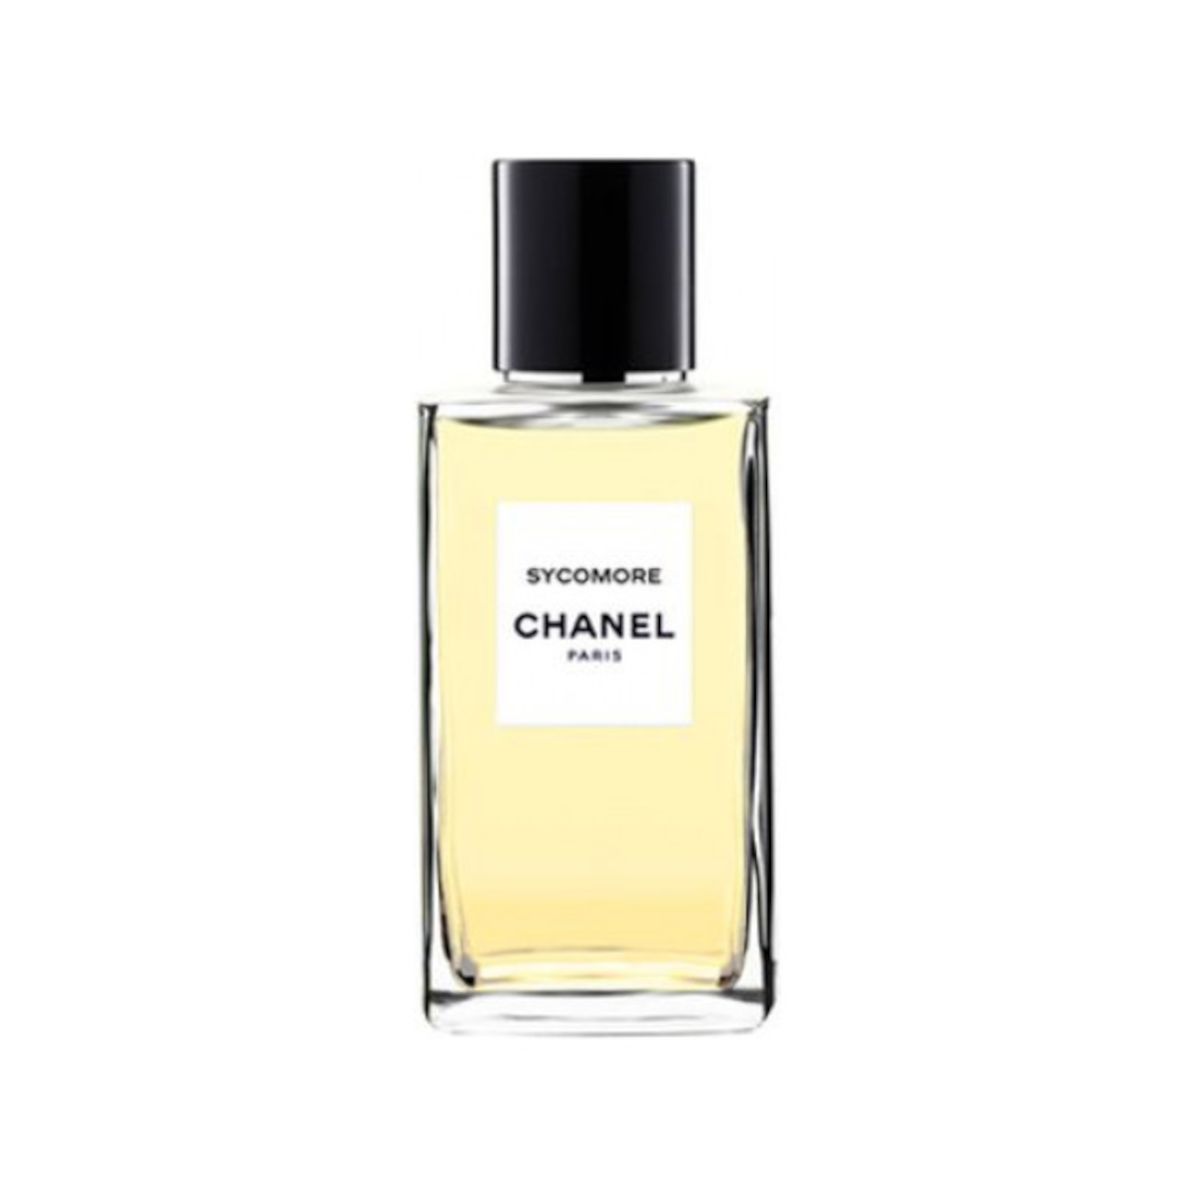 Chanel Sycomore 75ml woda perfumowana